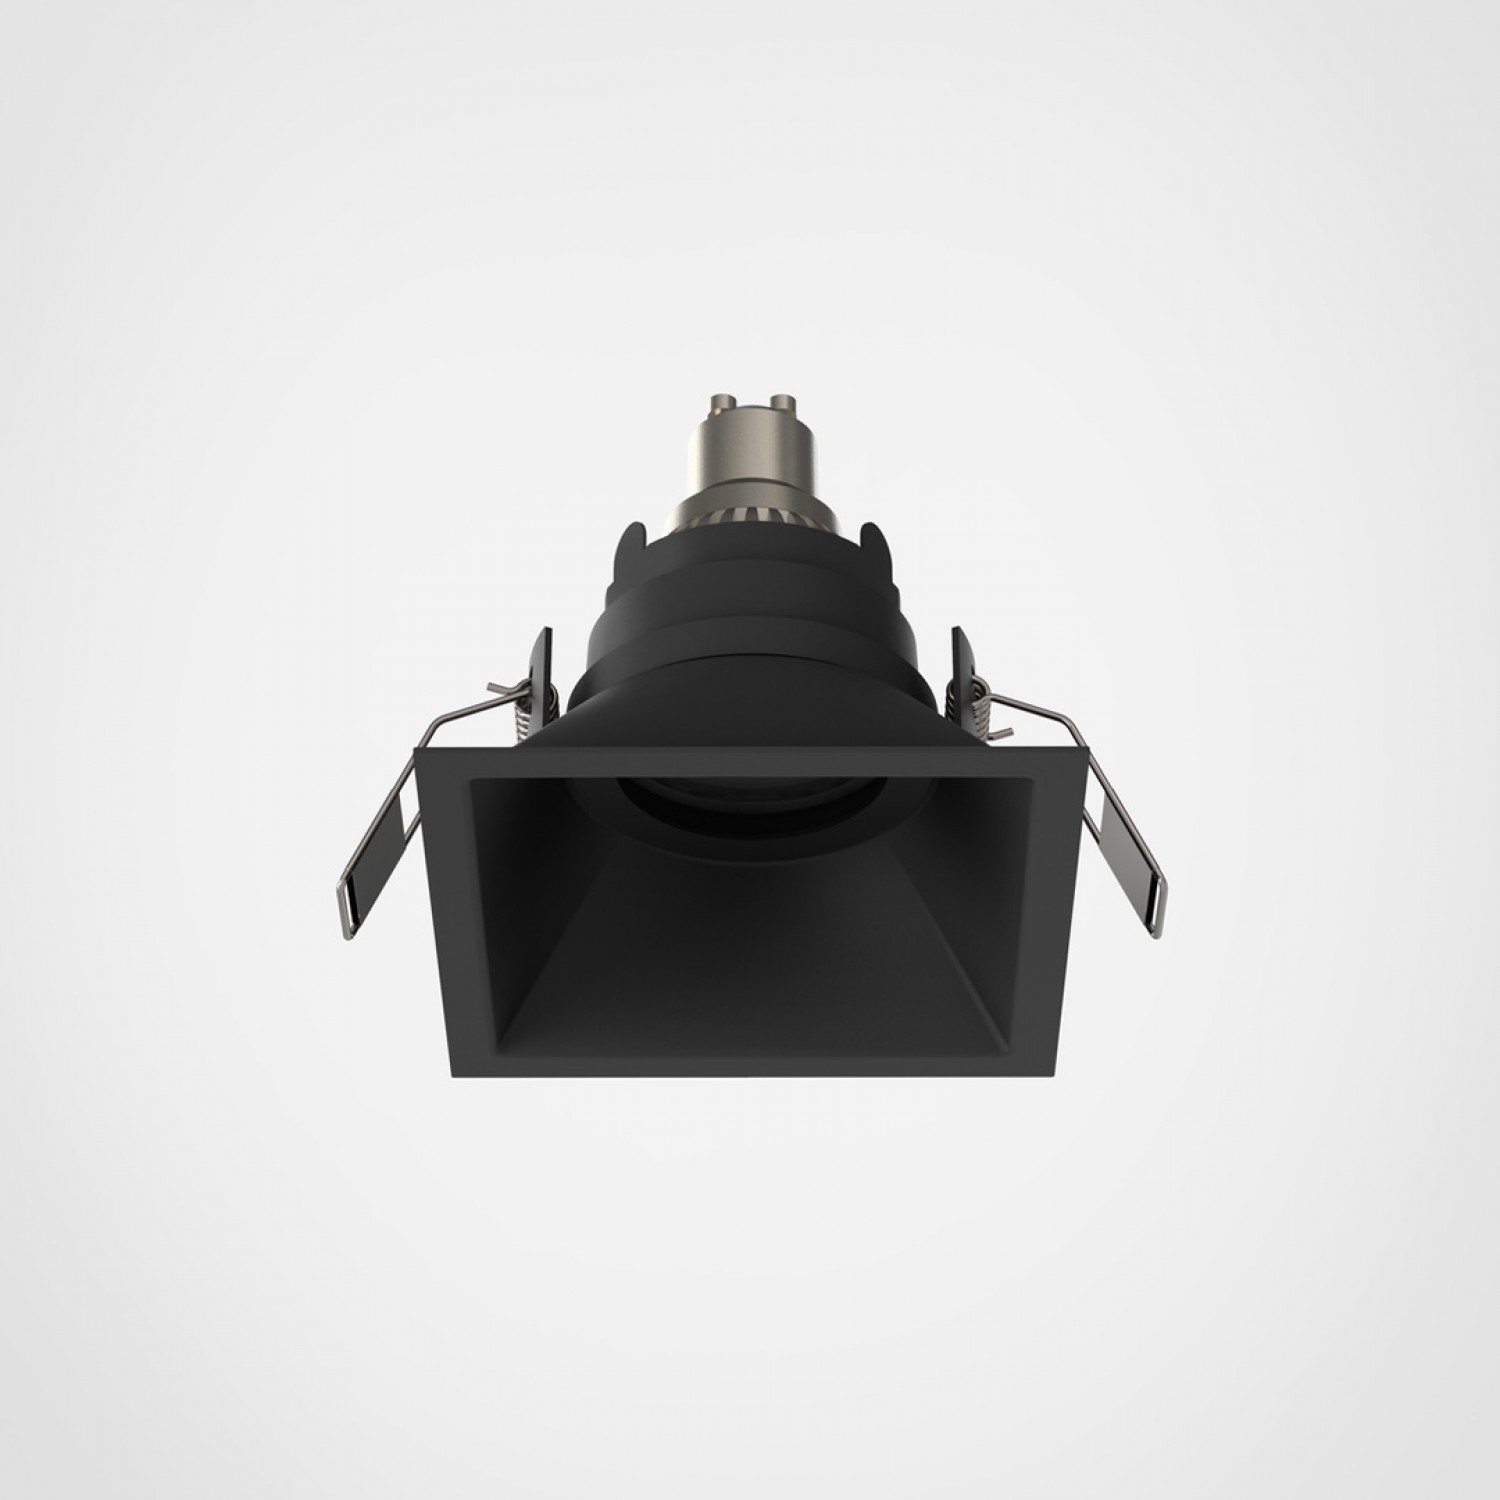 Врезной точечный светильник Astro Minima Slimline Square Fixed Fire-Rated IP65 1249039